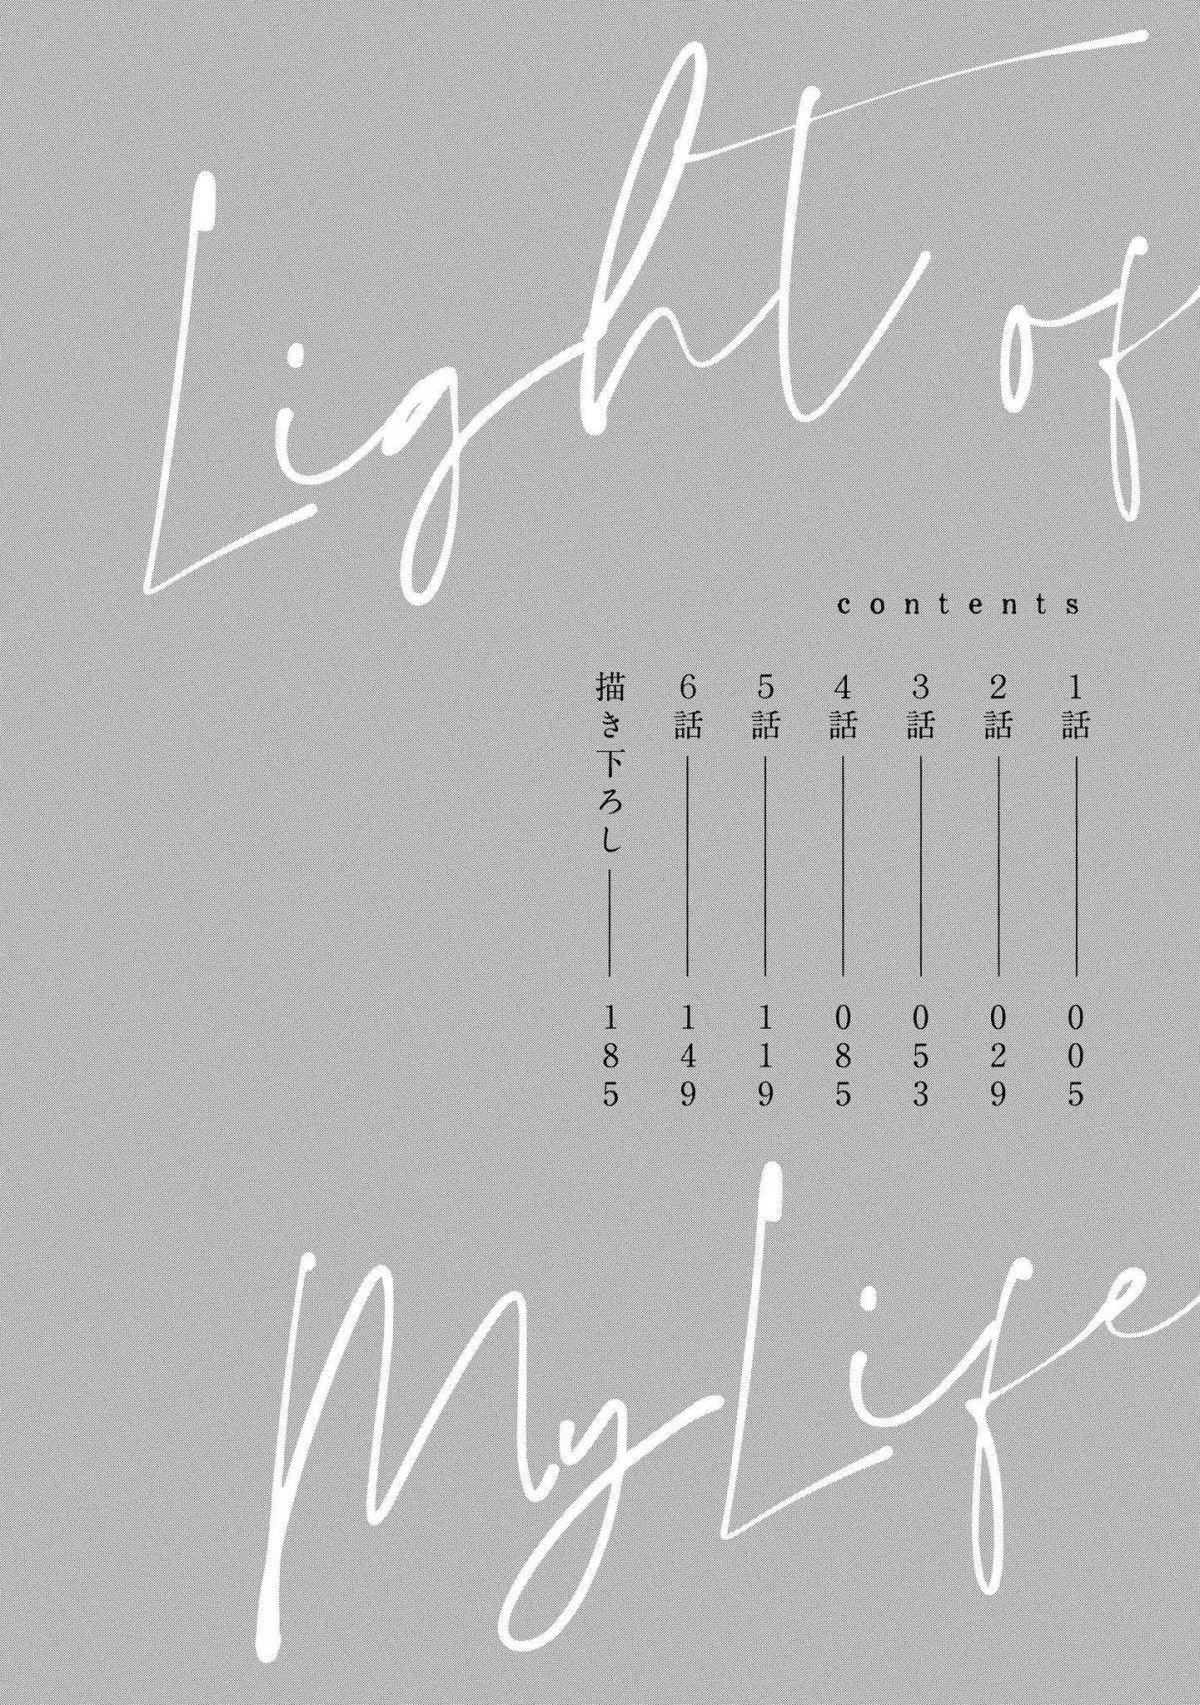 Light of my life Ch. 1 | 生命之光 01 3